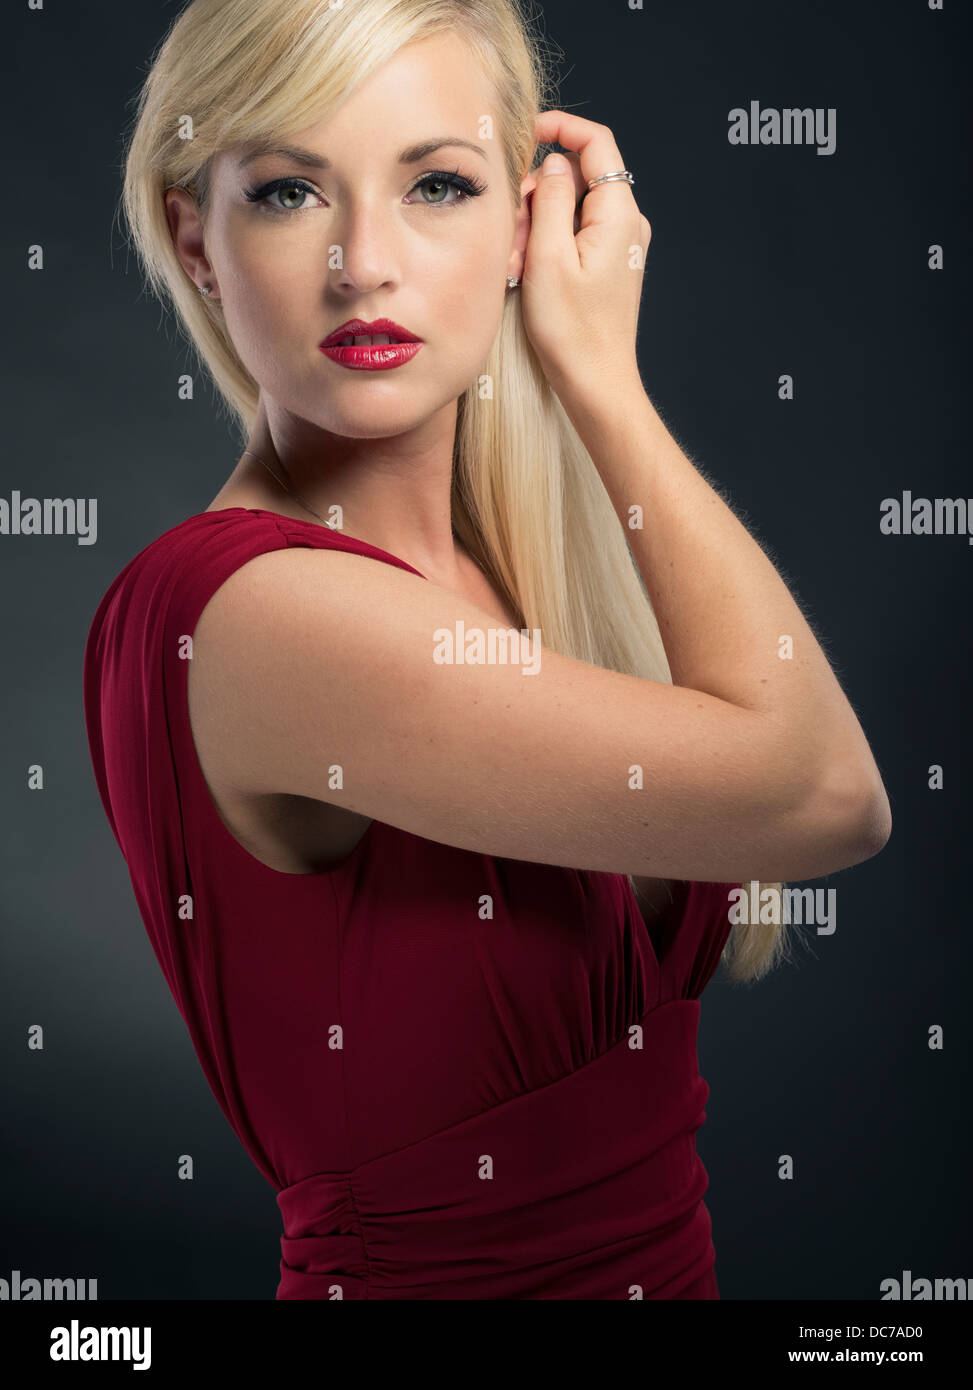 Beautiful blond Caucasian woman in her twenties wearing deep red dress formal gown Stock Photo